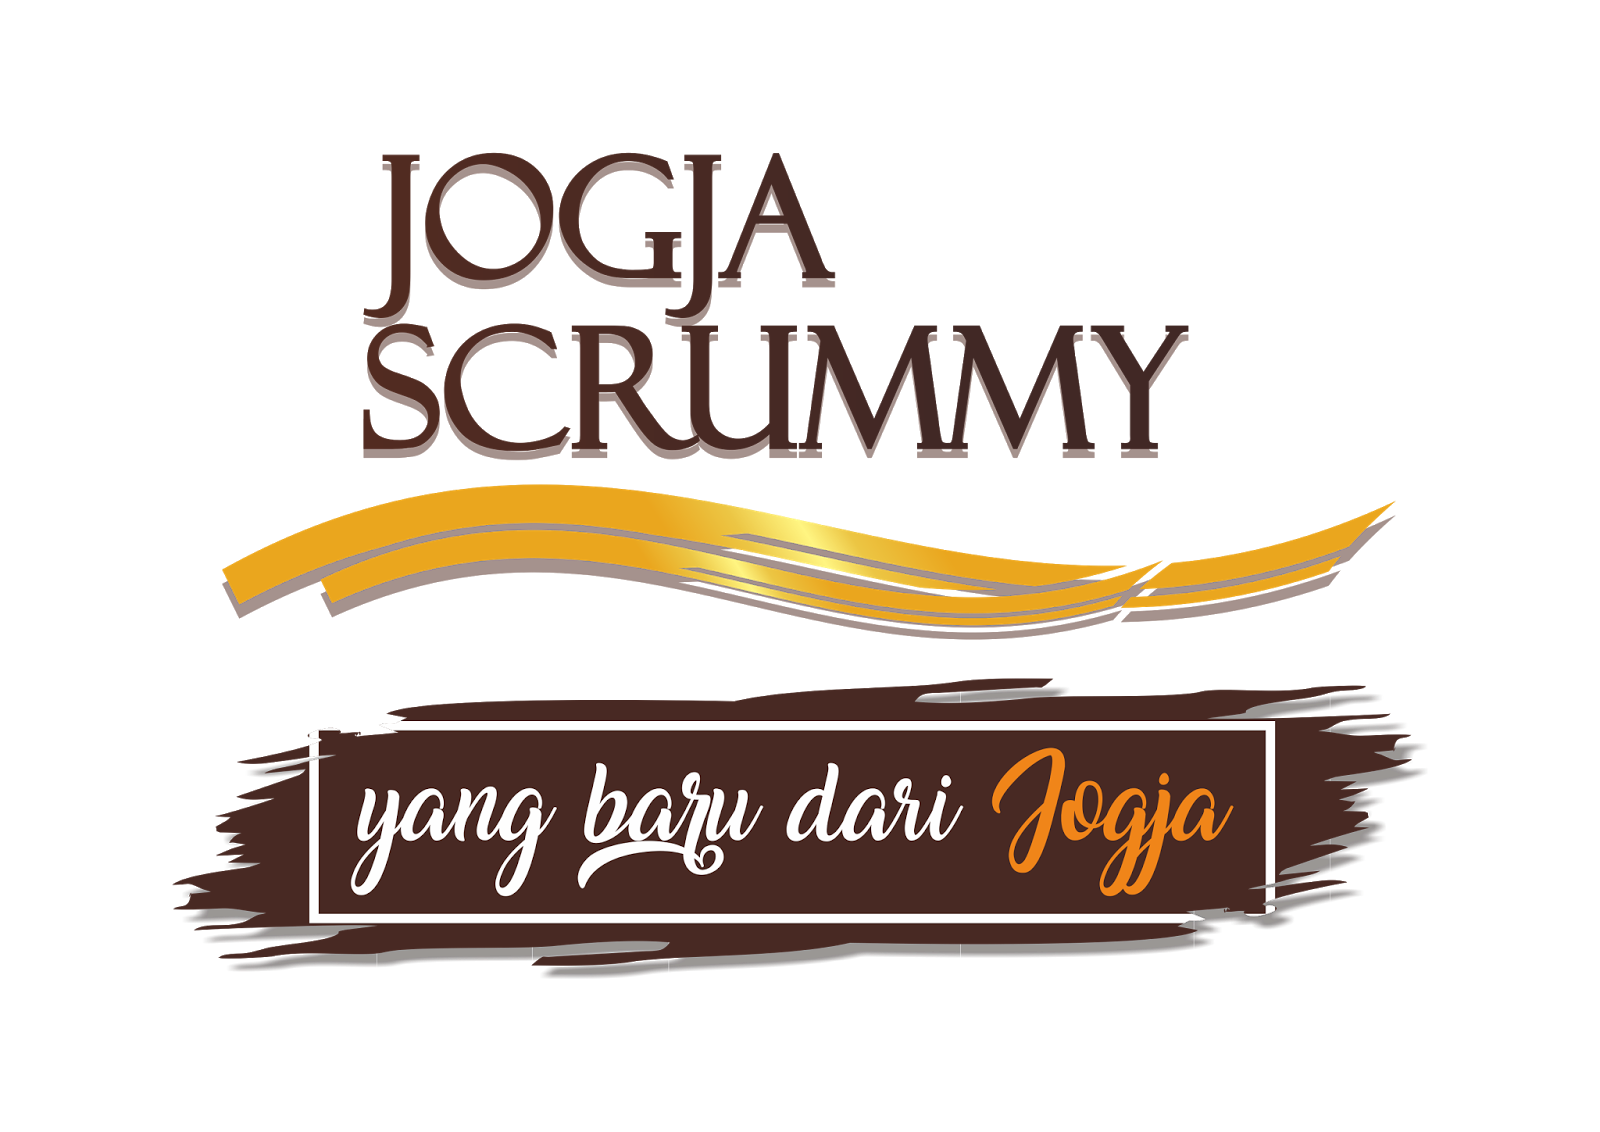 Lowongan Kerja di Jogjakarta Scrummy - Yogyakarta (Kepala 